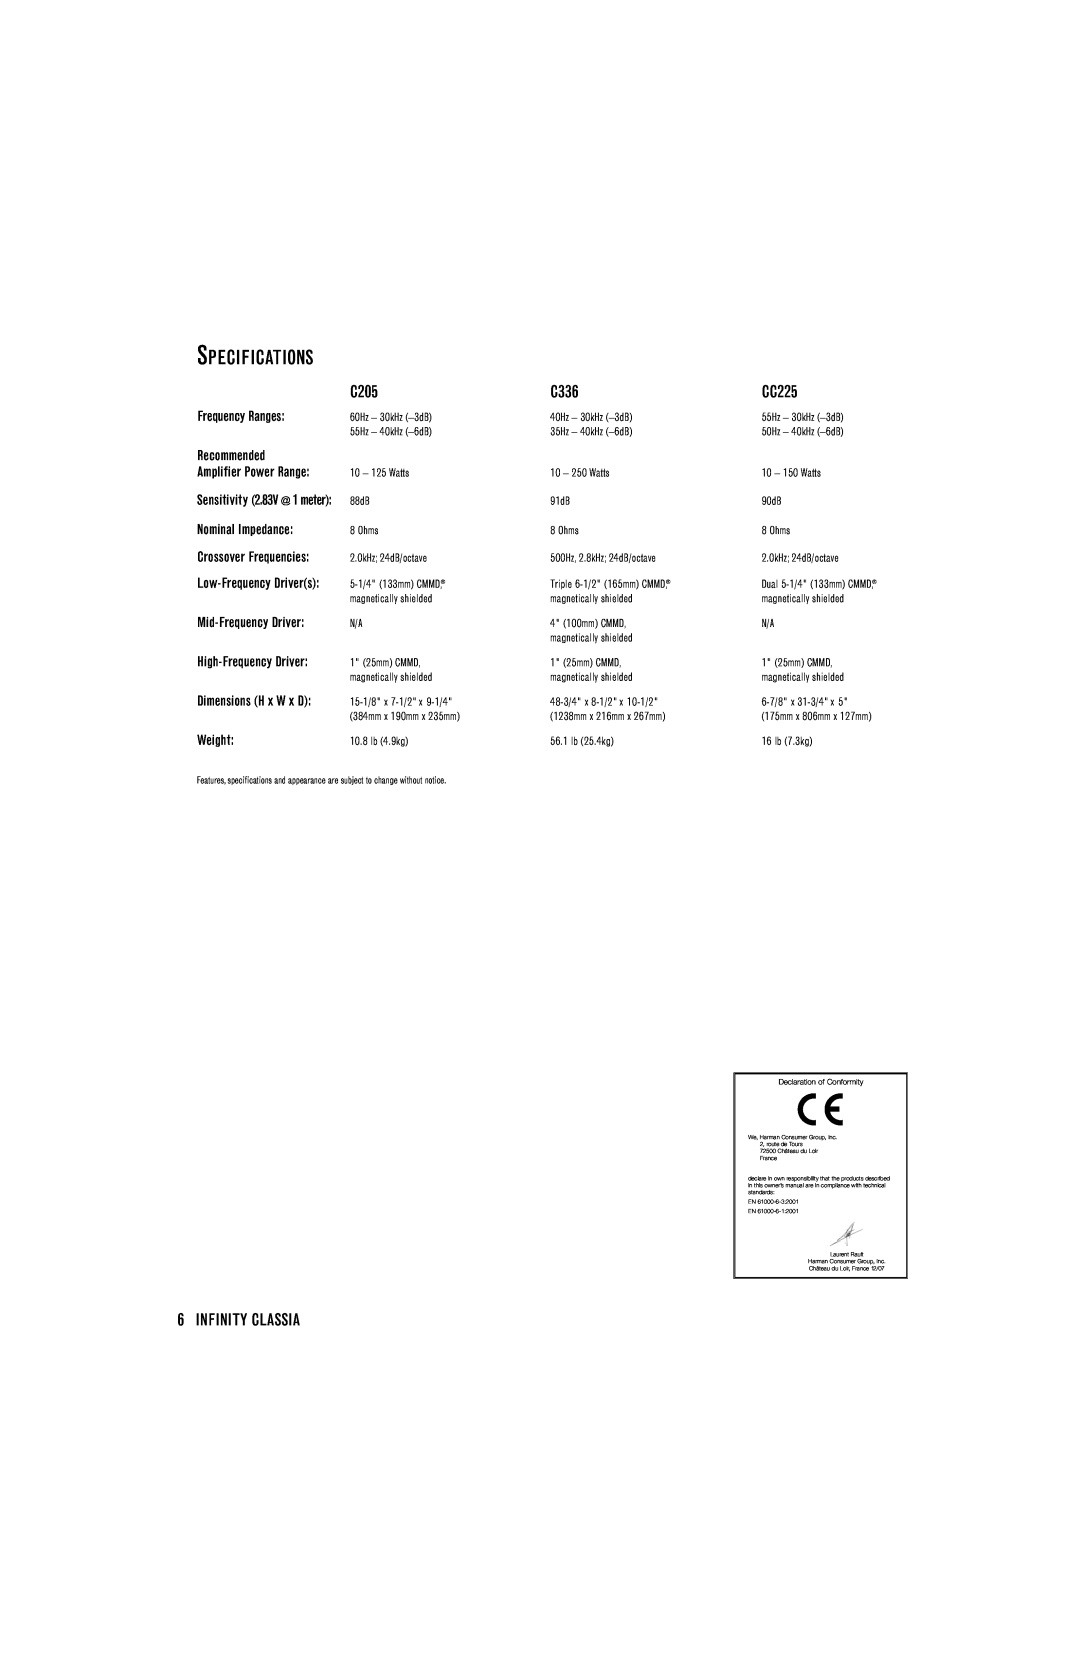 Infinity C205 manual Specifications, CC225, Infinity Classia, C336 